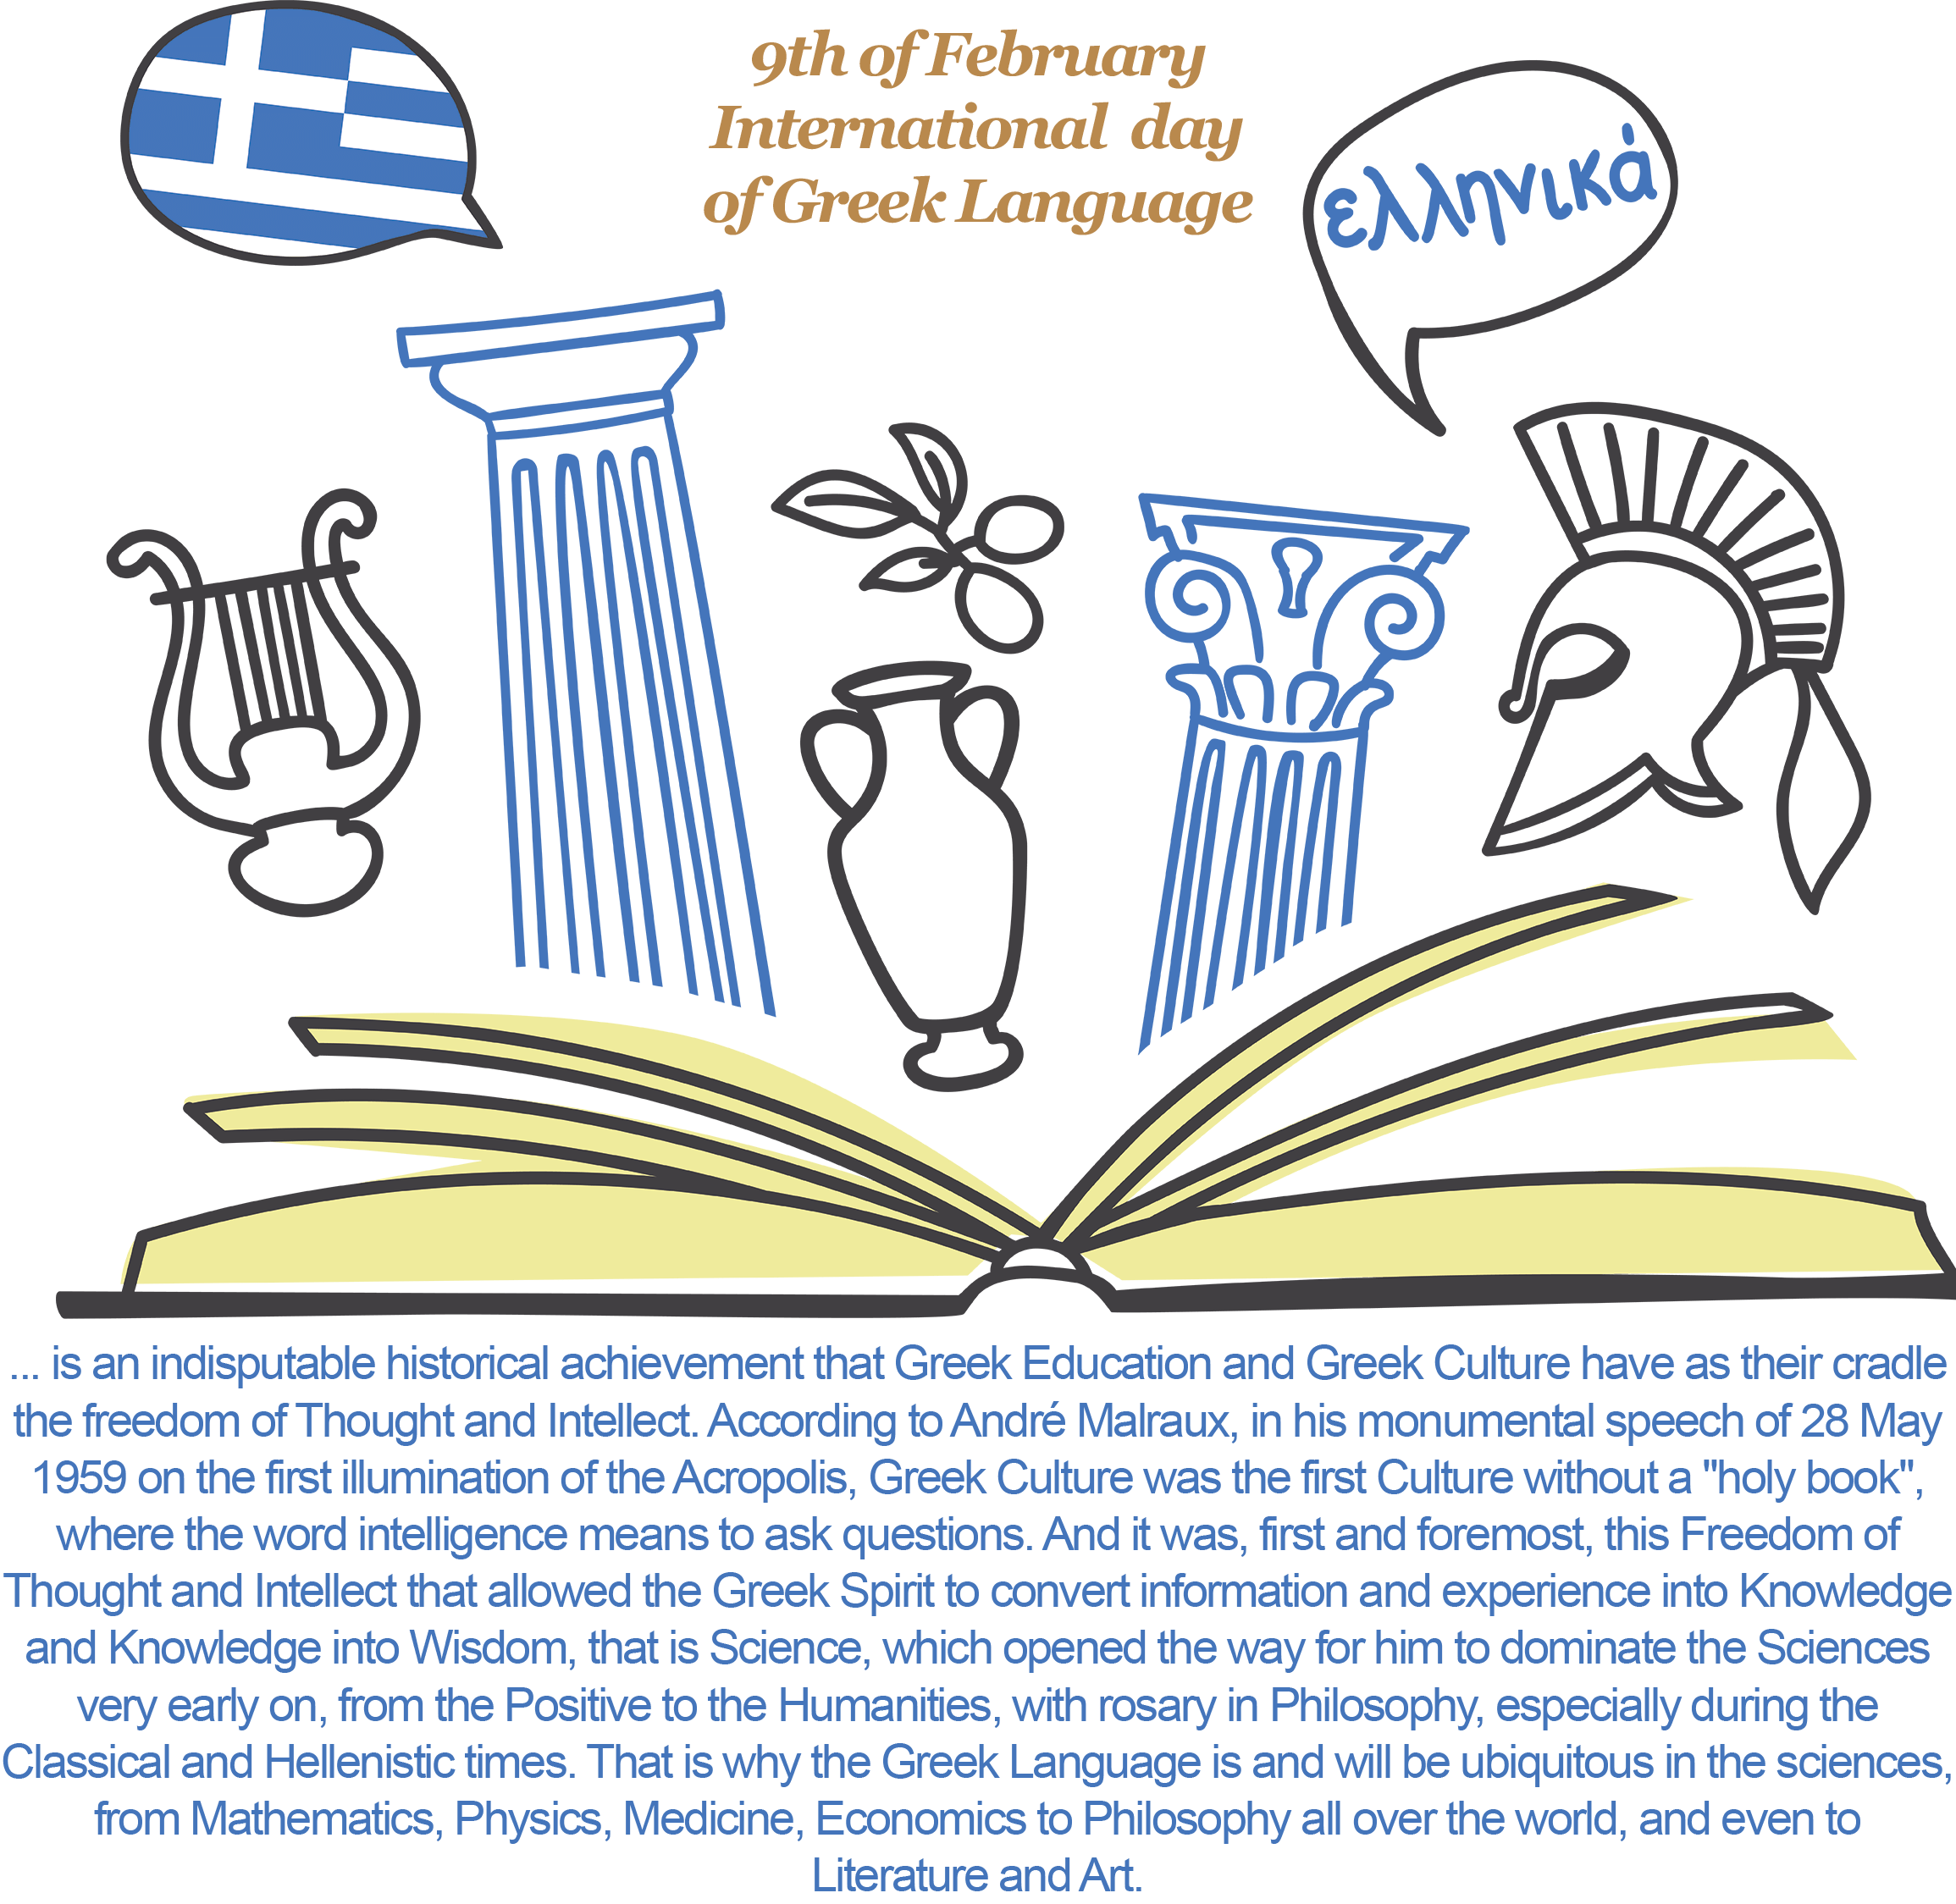 International Day of Greek Language